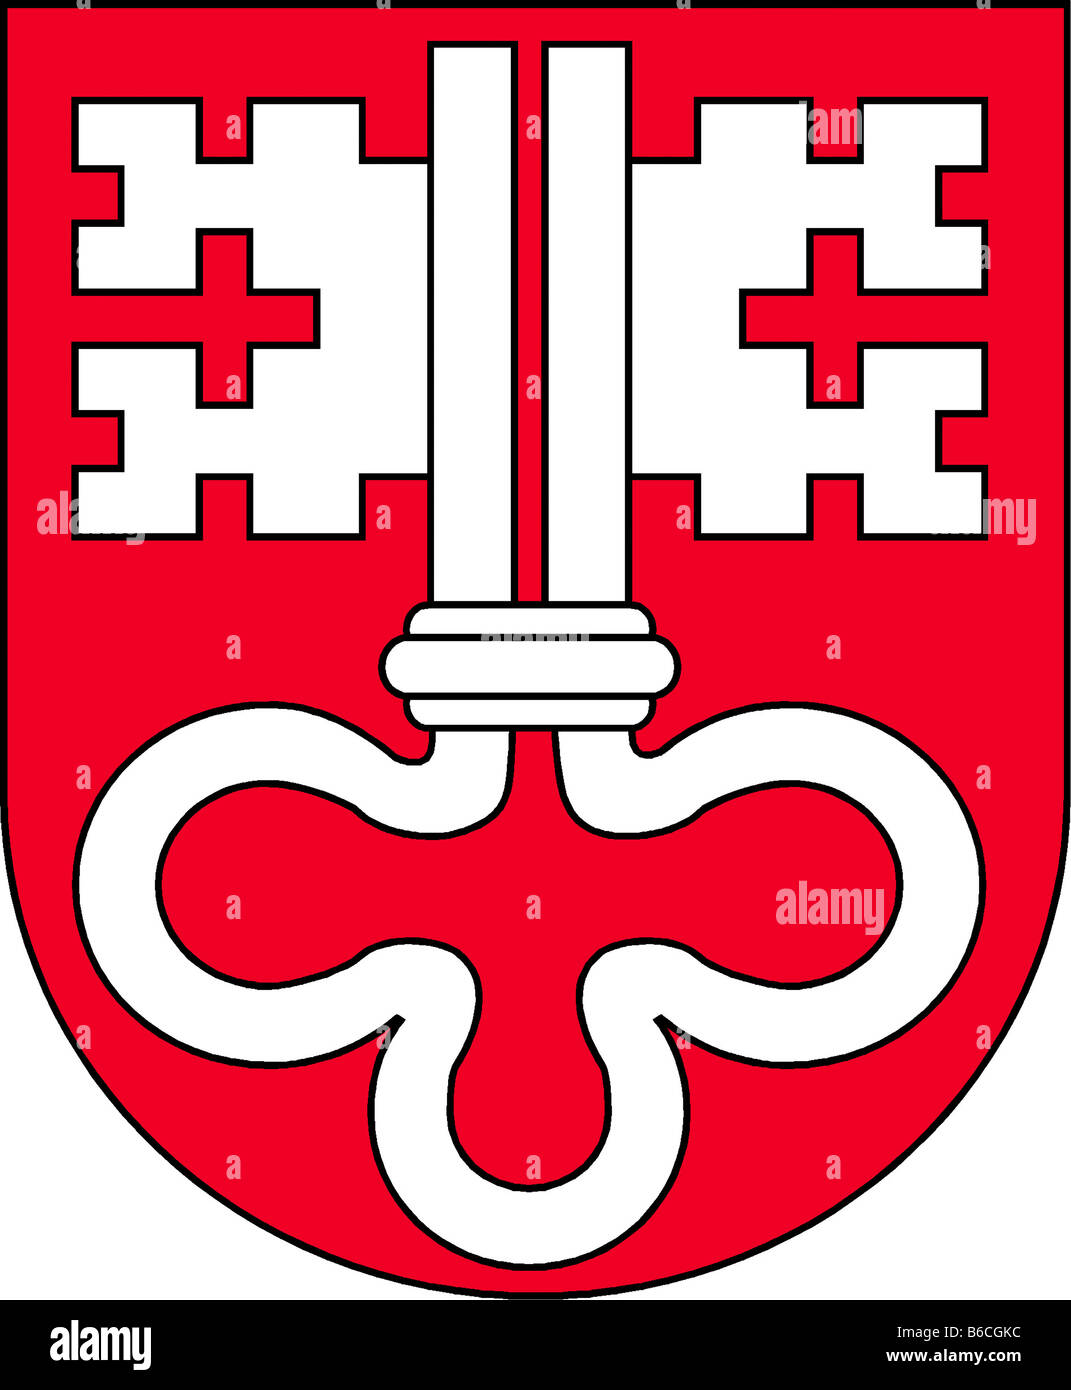 illustration flag of canton of nidwalden switzerland Stock Photo